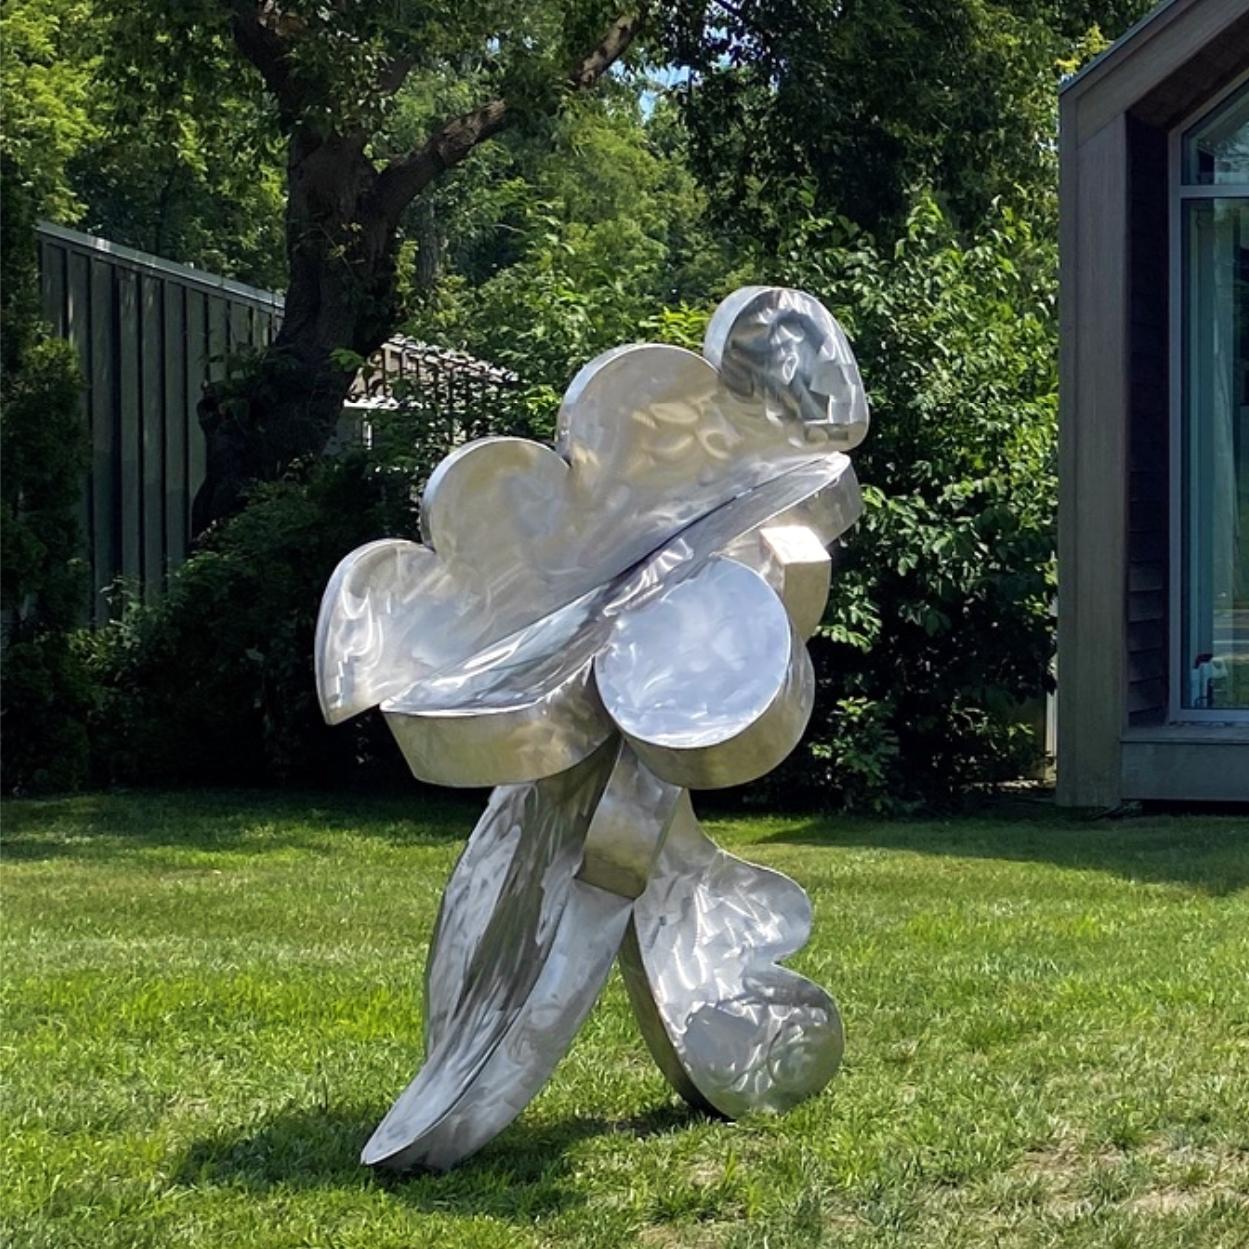 Hans Van de Bovenkamp Abstract Sculpture – "Unerschrockene Wolke" Abstrakt, Stahl-Metall-Skulptur, großformatig, im Freien